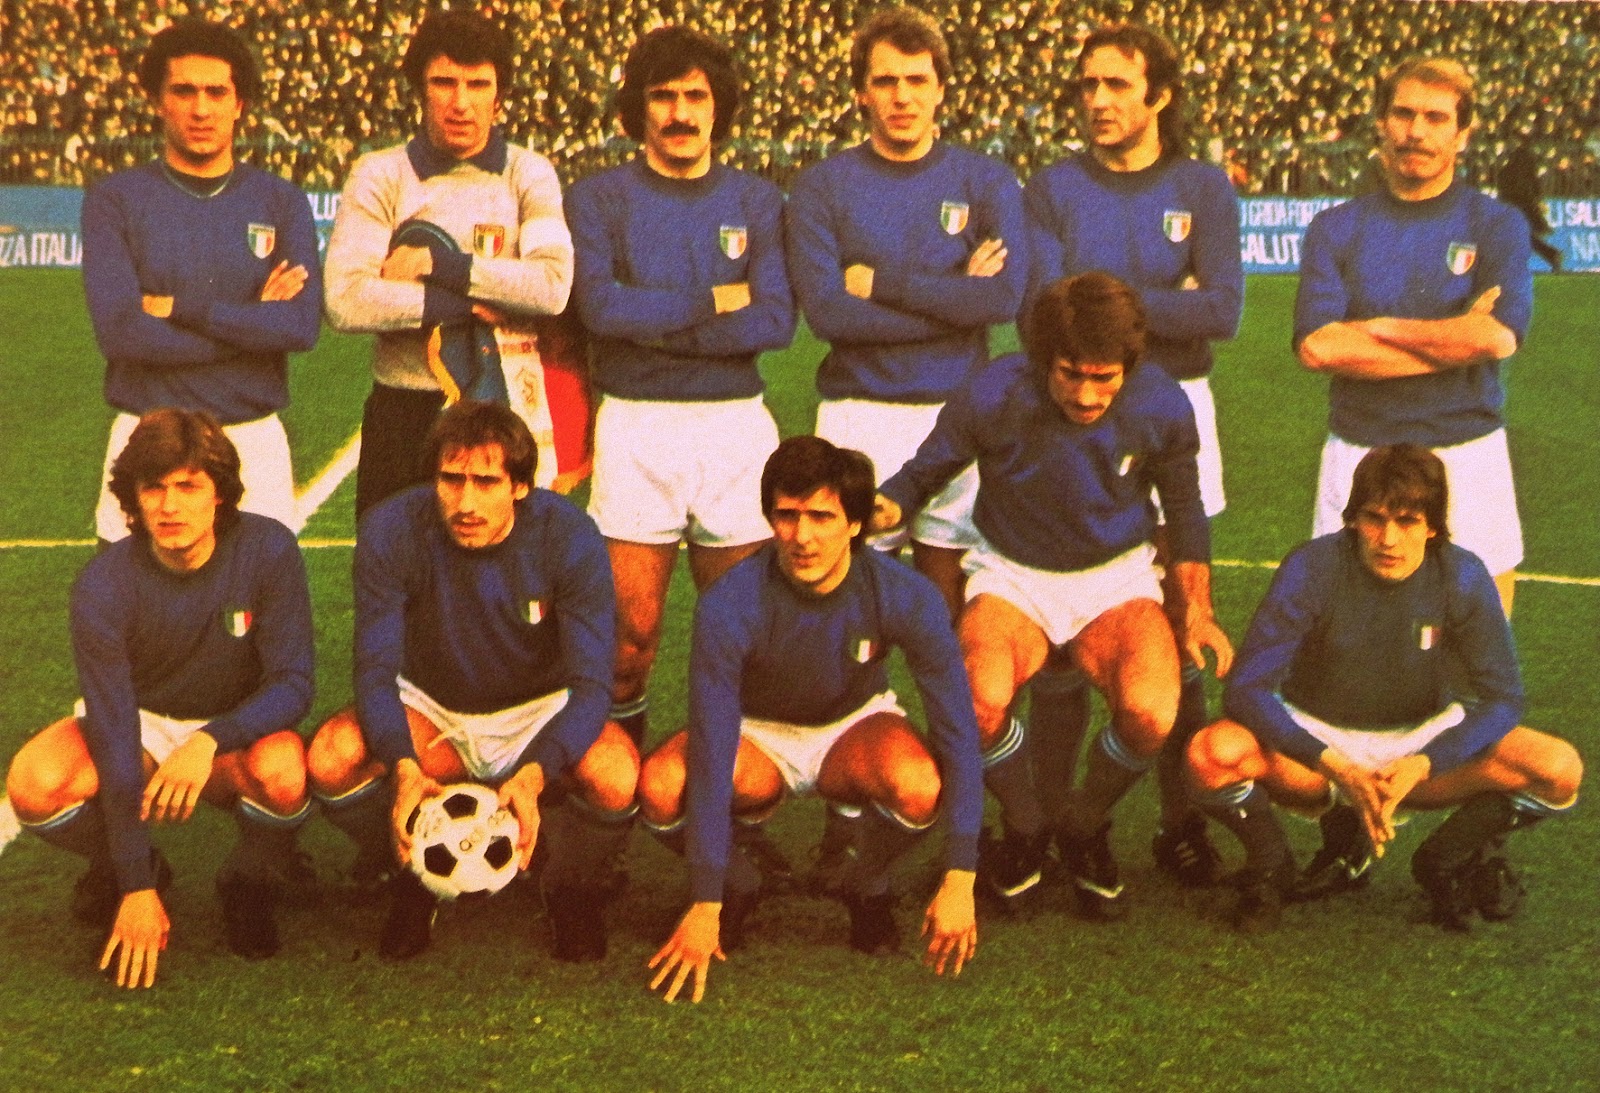 Afbeeldingsresultaat voor Campionato mondiale di calcio 1978 nazionale italiana